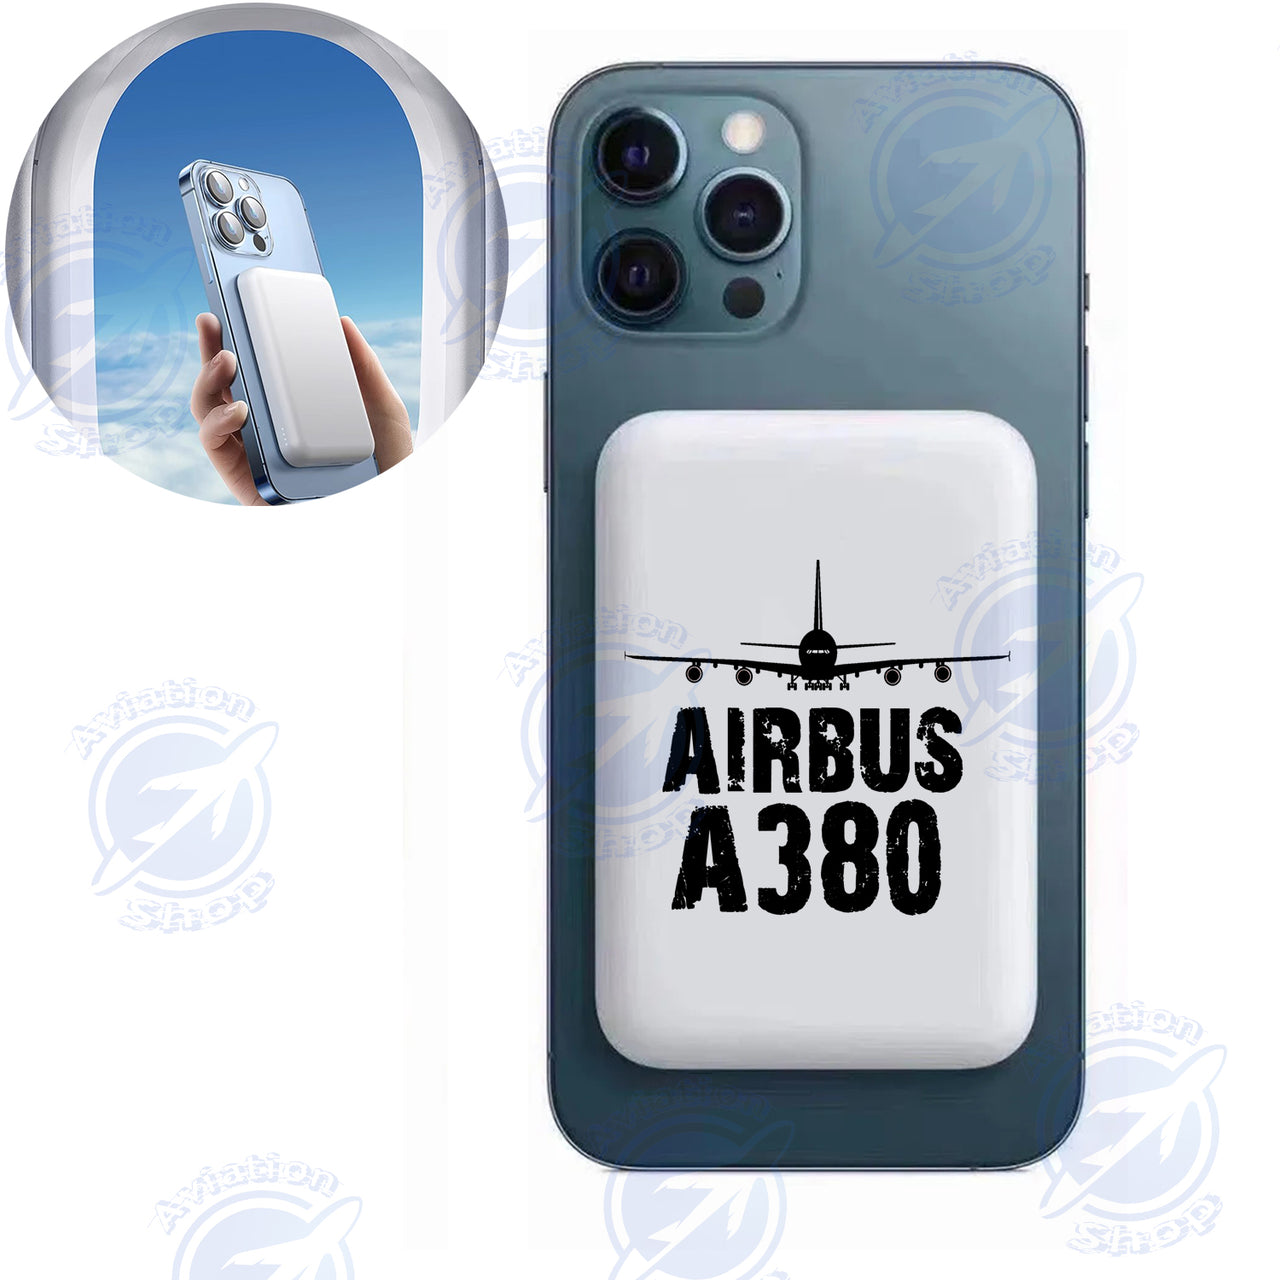 Airbus A380 & Plane Designed MagSafe PowerBanks